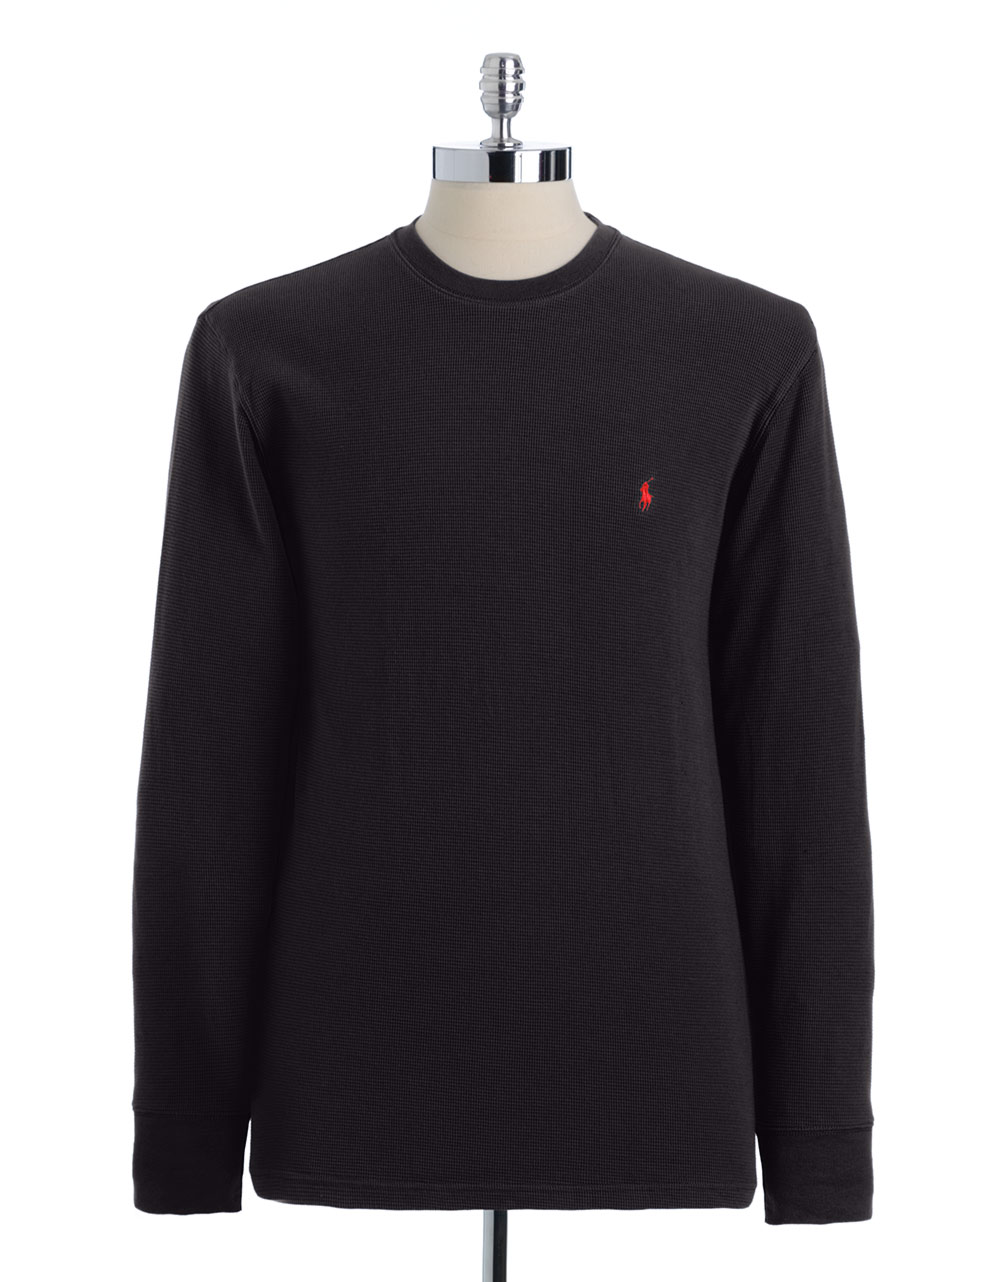 Polo Ralph Lauren Thermal Long Sleeved Sleepwear Top in Black for Men